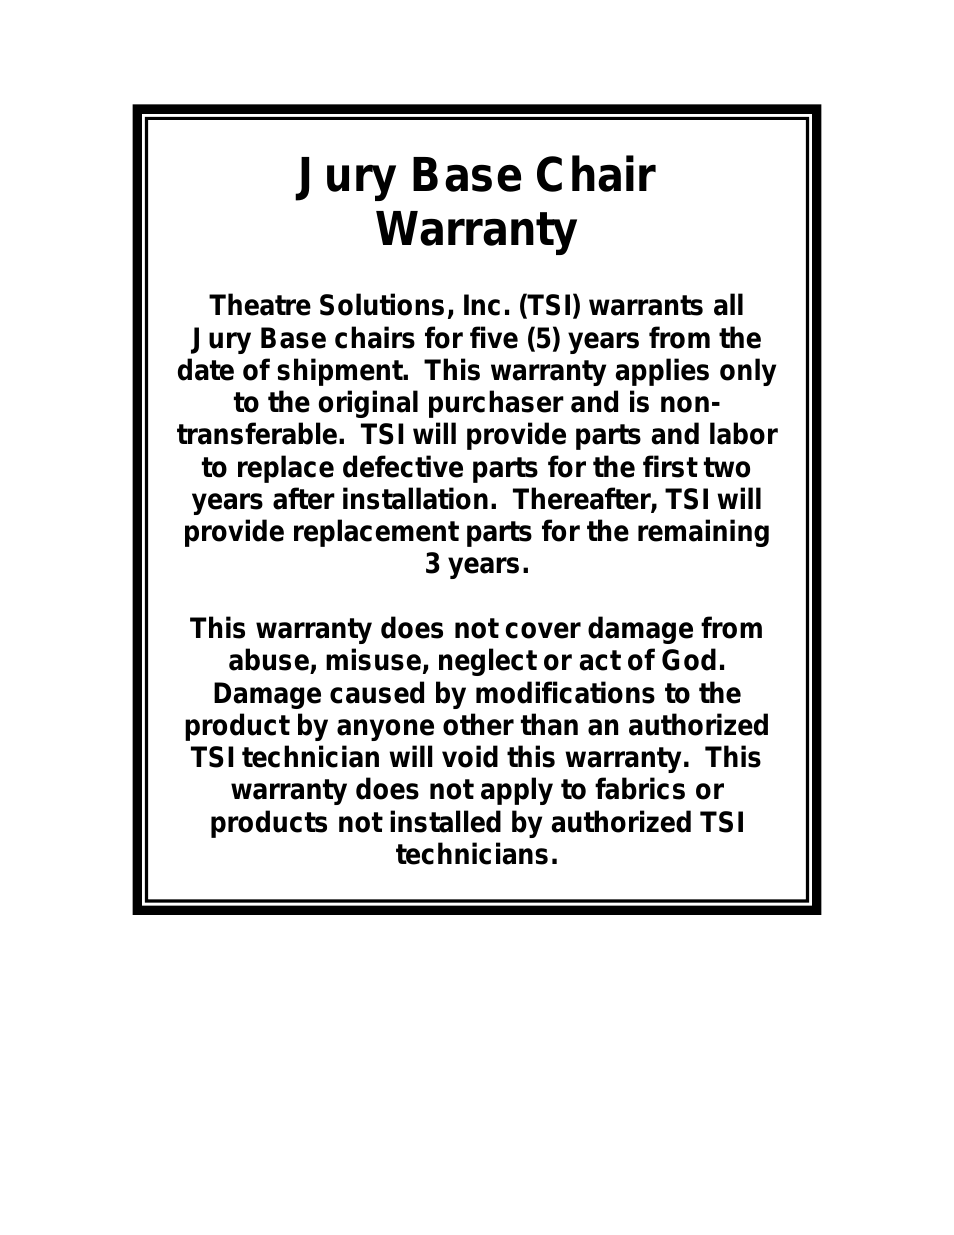 Jury Base Chair Warranty